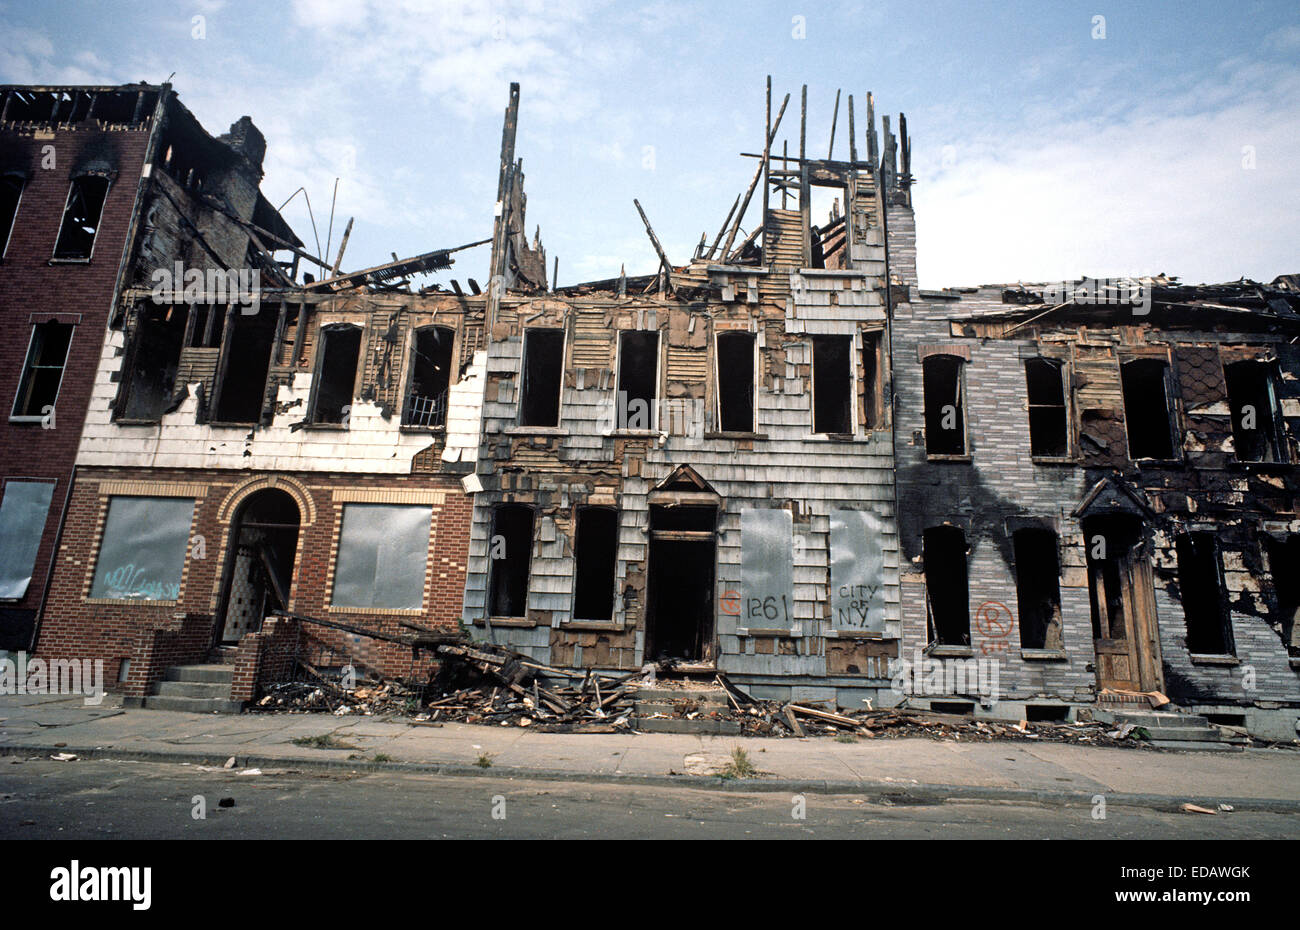 USA, BROOKLYN, NEW YORK CITY - AUGUST 1977. Brooklyn, New York City, fire damaged abandoned buildings. Stock Photo